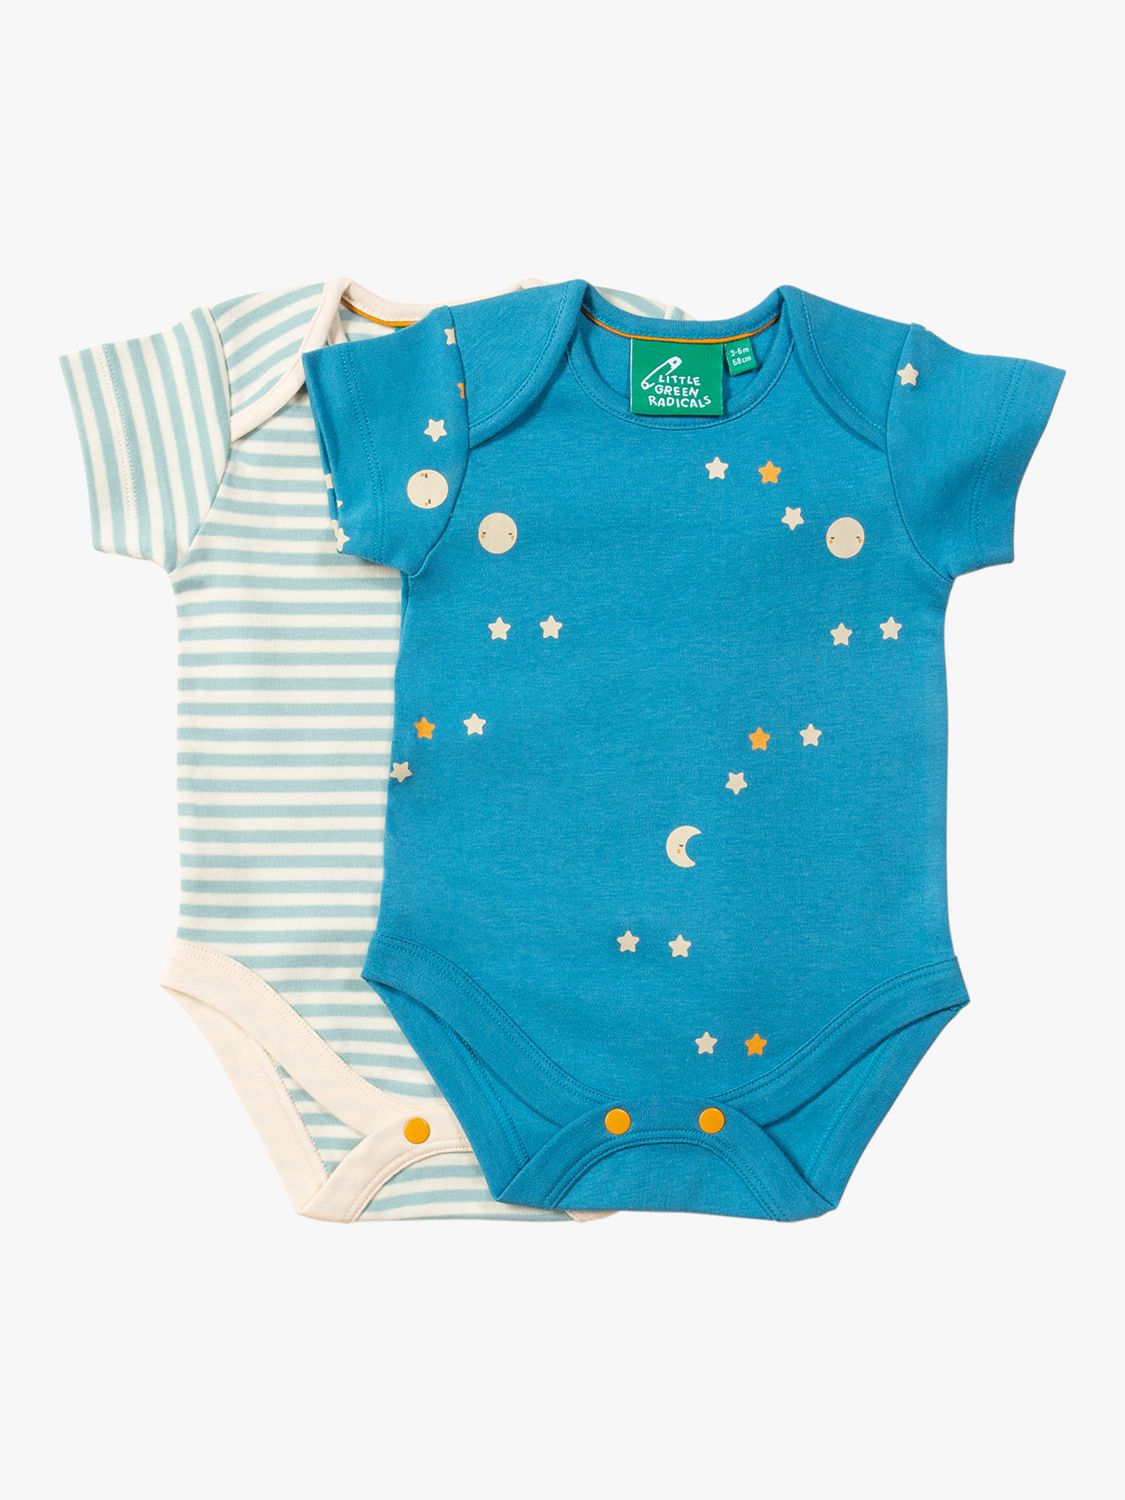 Little Green Radicals Baby Organic Cotton Dawn Bodysuits, Pack of 2, Multi, 12-18 months